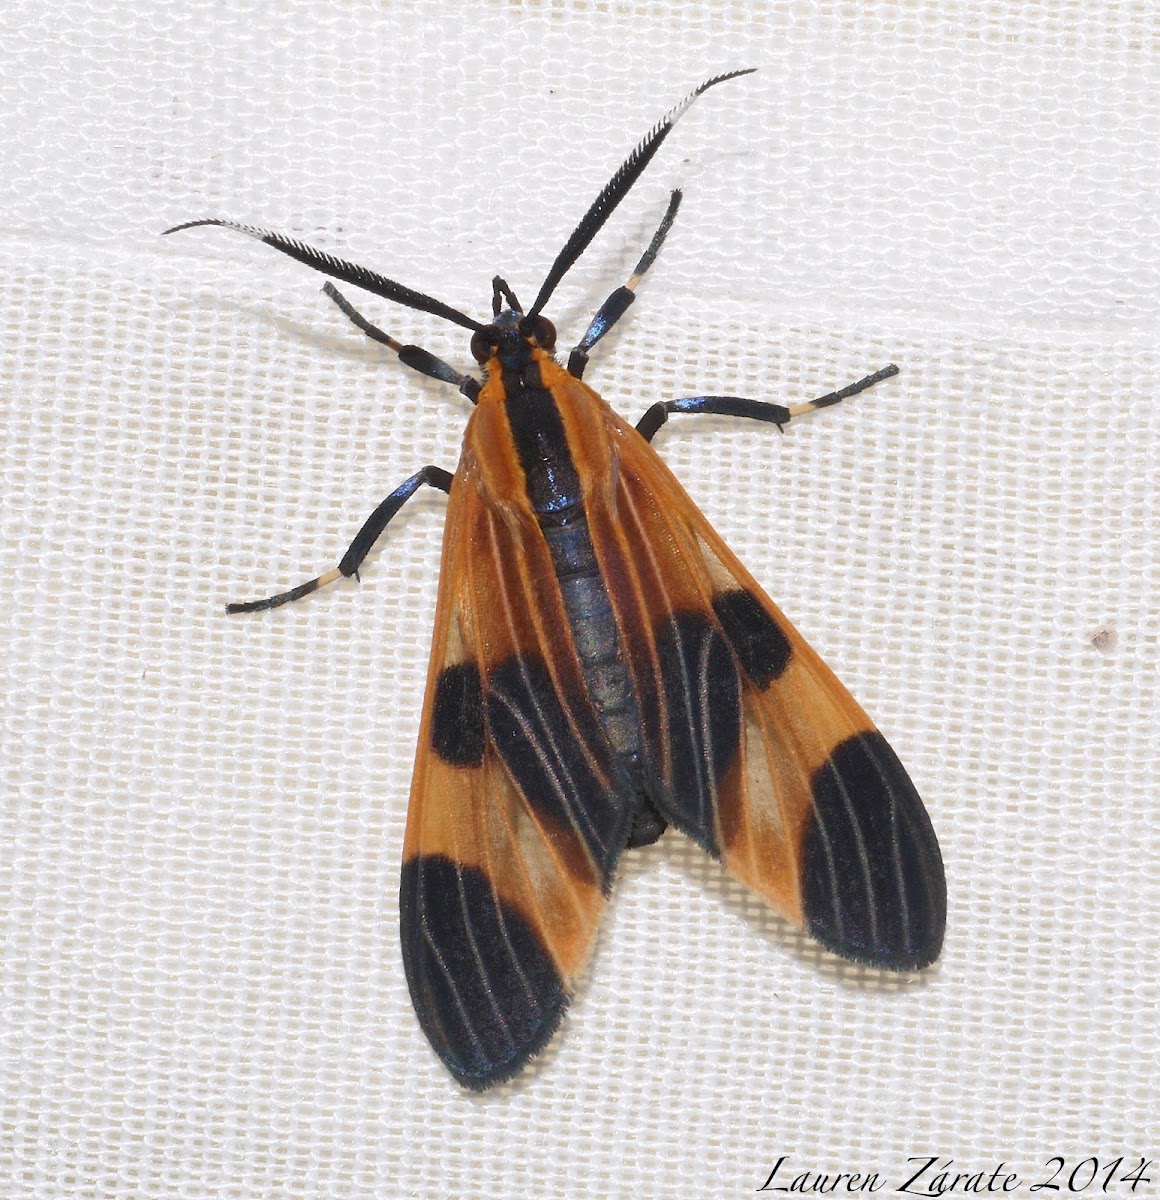 Tiger Moth Mimic of a Lycid Beetle